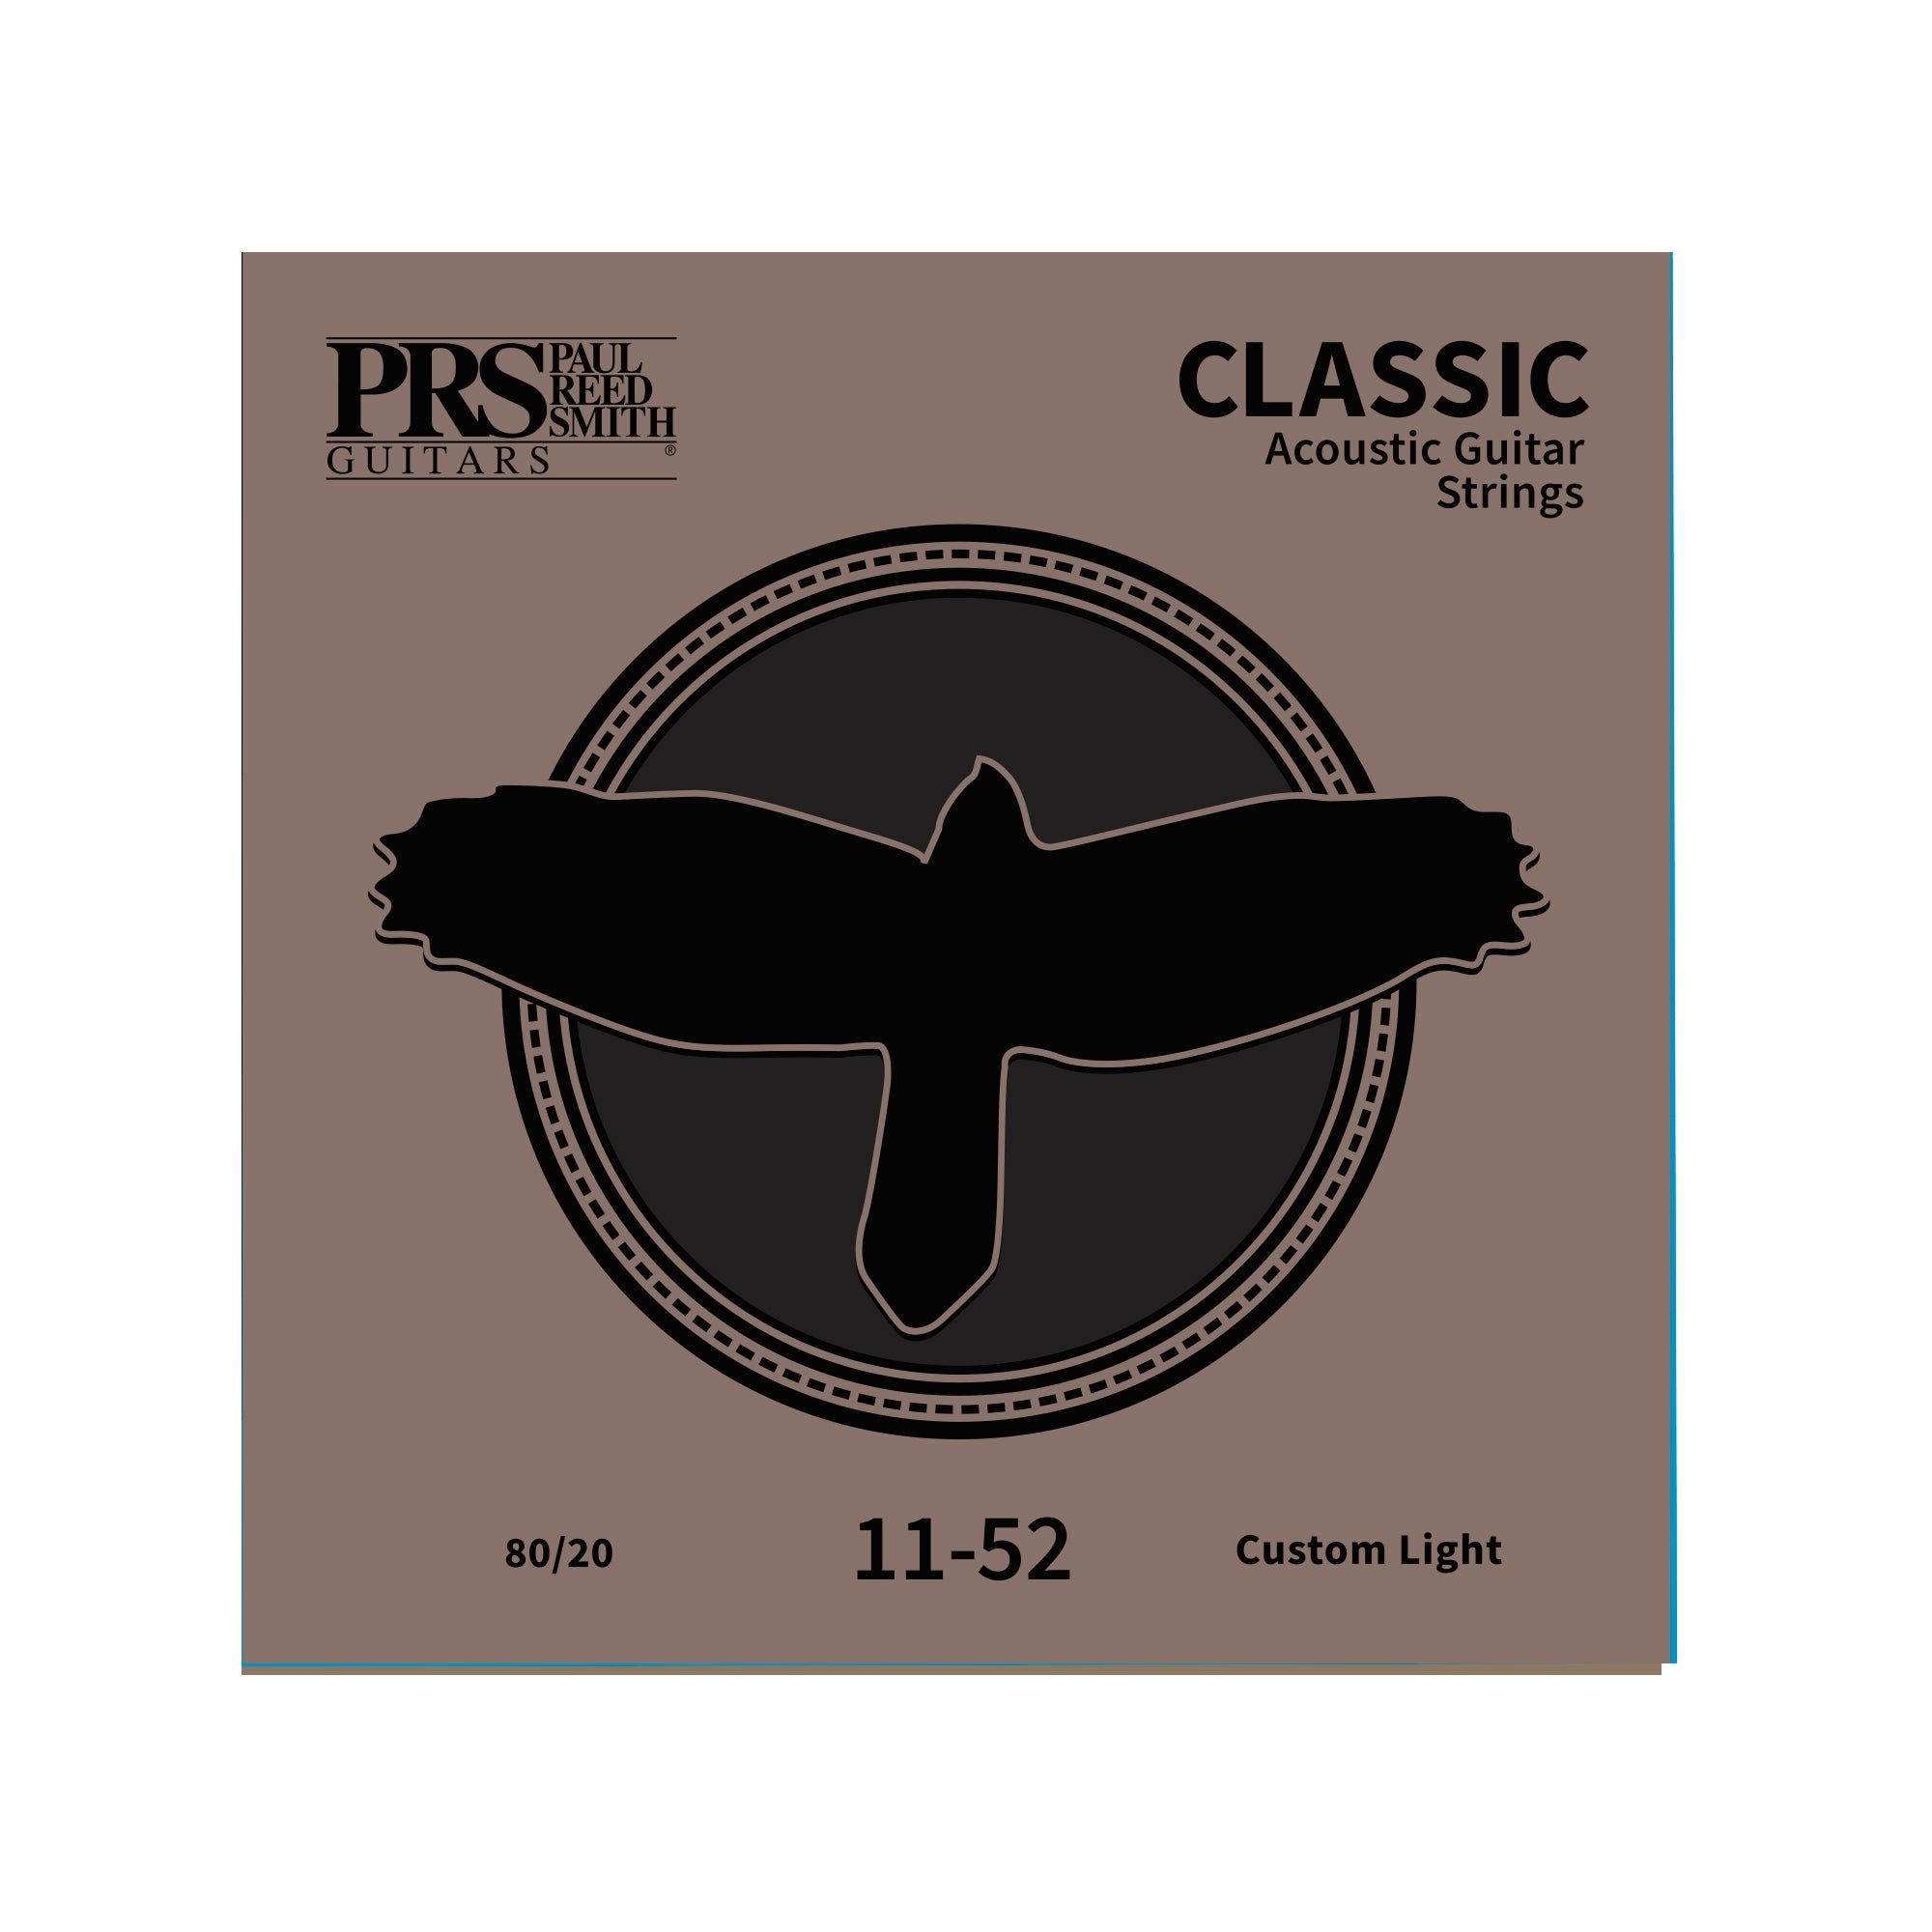 PRS Classic Acoustic guitar Strings - HIENDGUITAR 11-52 Custom Light 11-52 Custom Light PRS Acoustic Strings